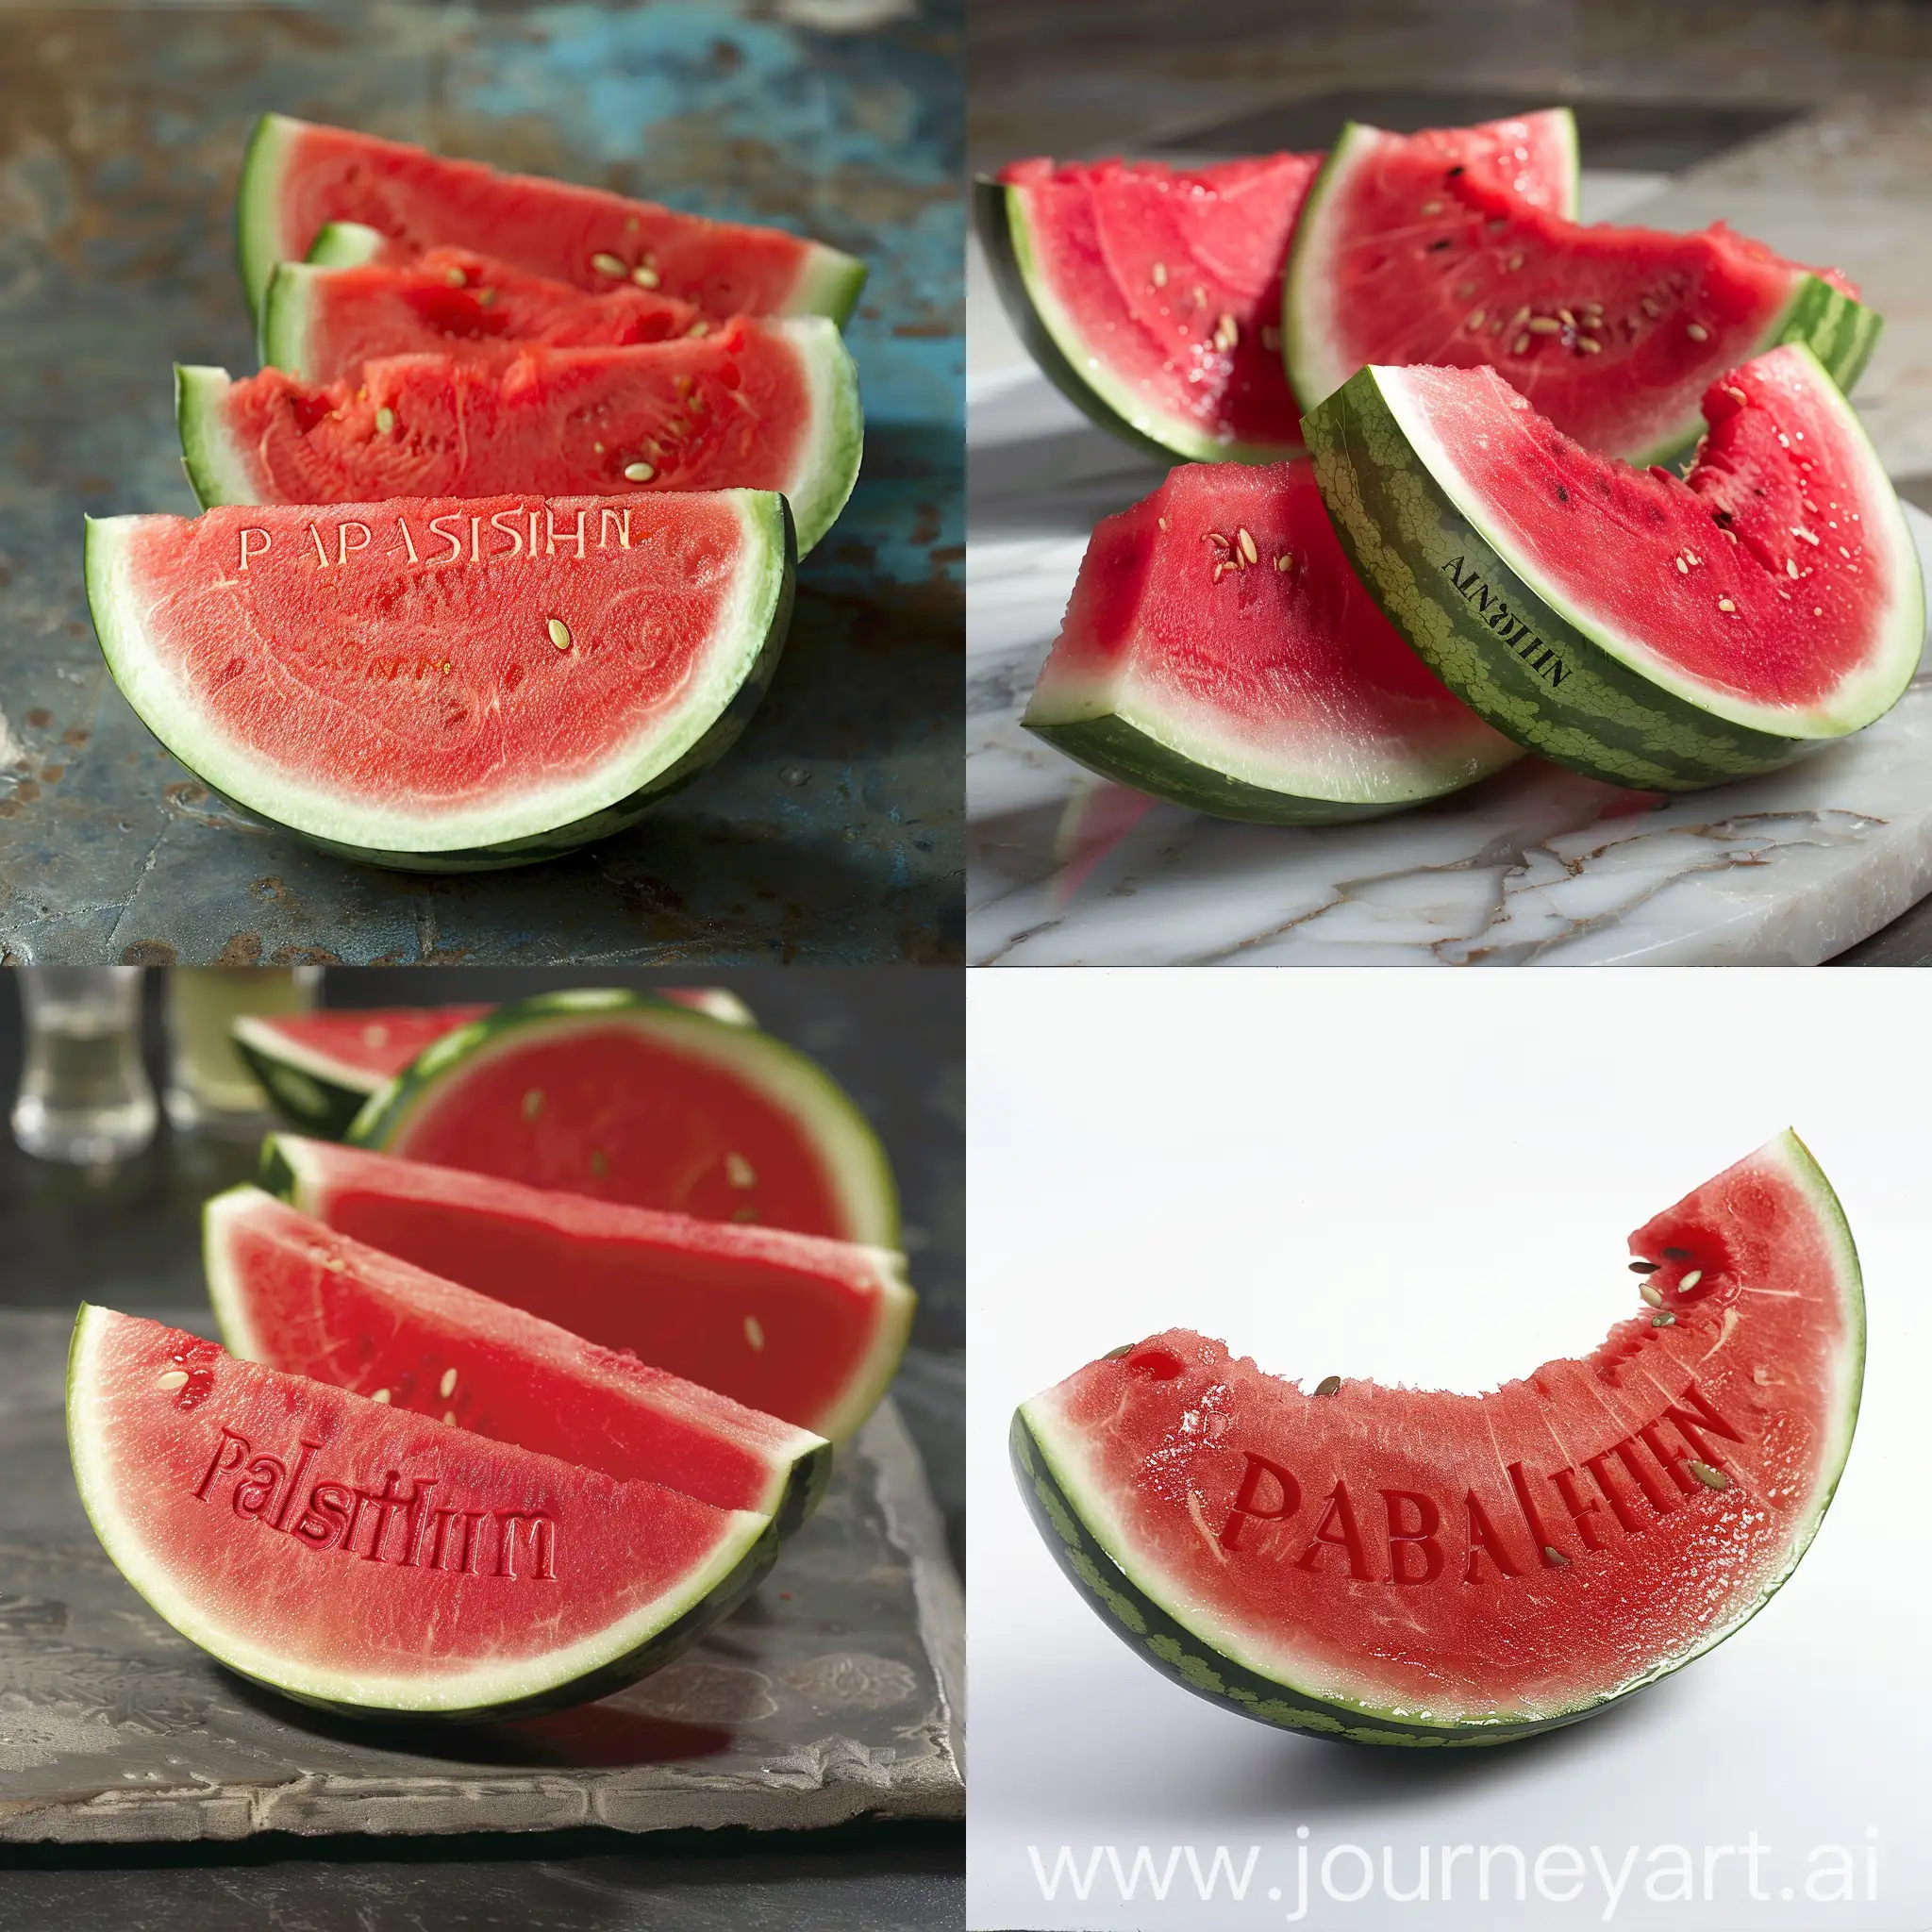 On red watermelon flesh Inscription "PALESTINE" Beautiful 
